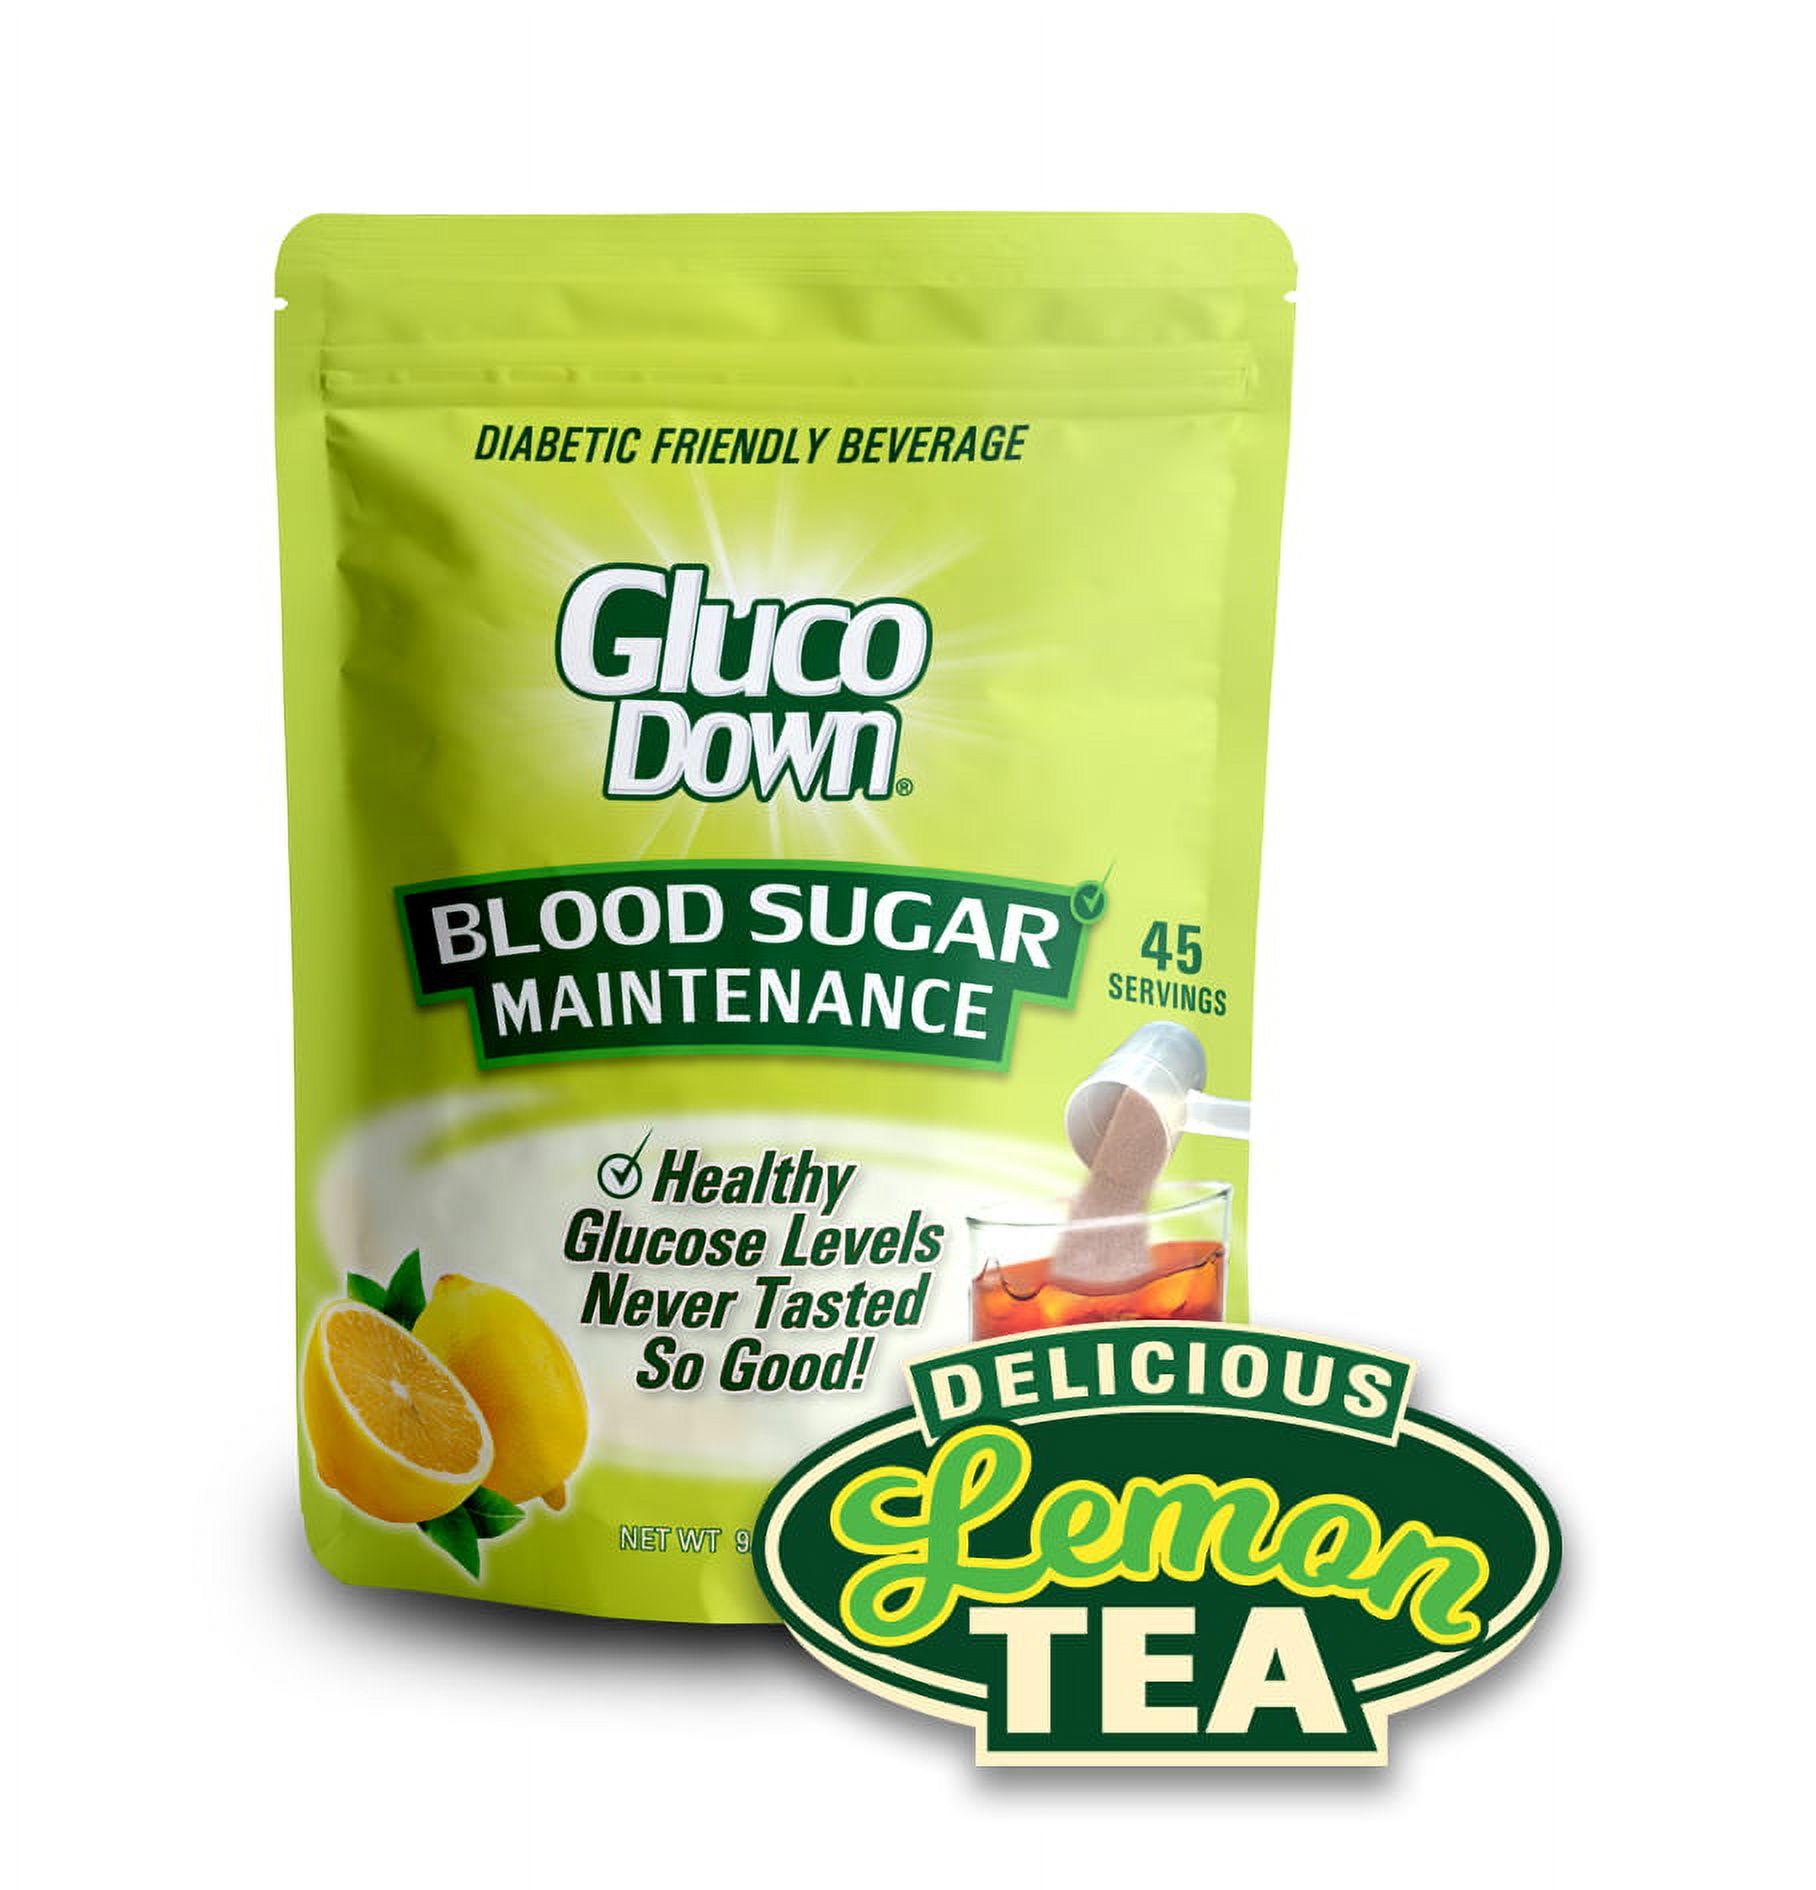 GlucoDown Diabetic Friendly Beverage, Delicious Lemon Tea (45 Servings). - image 1 of 4